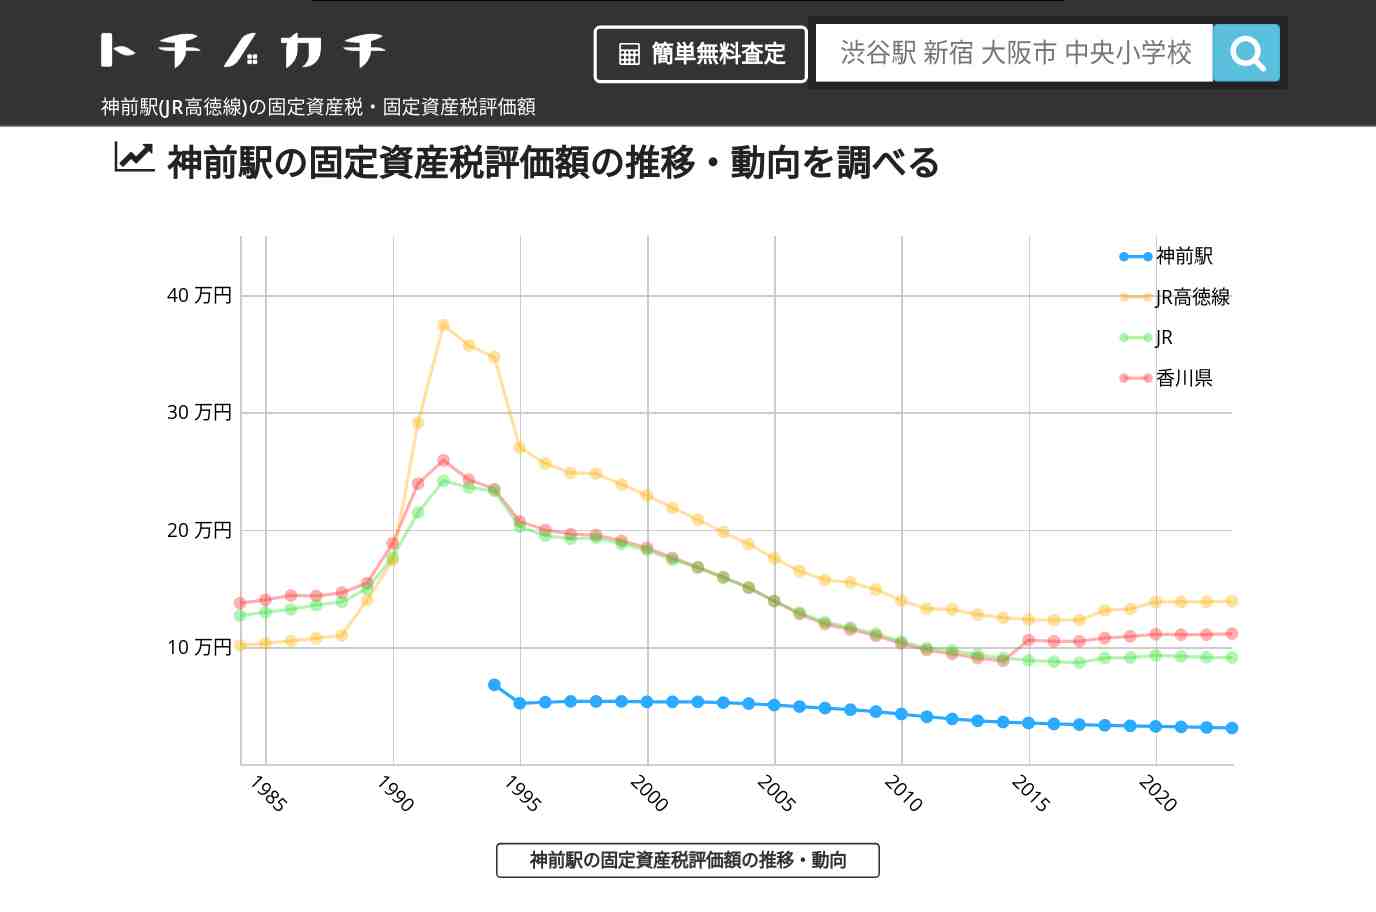 神前駅(JR高徳線)の固定資産税・固定資産税評価額 | トチノカチ